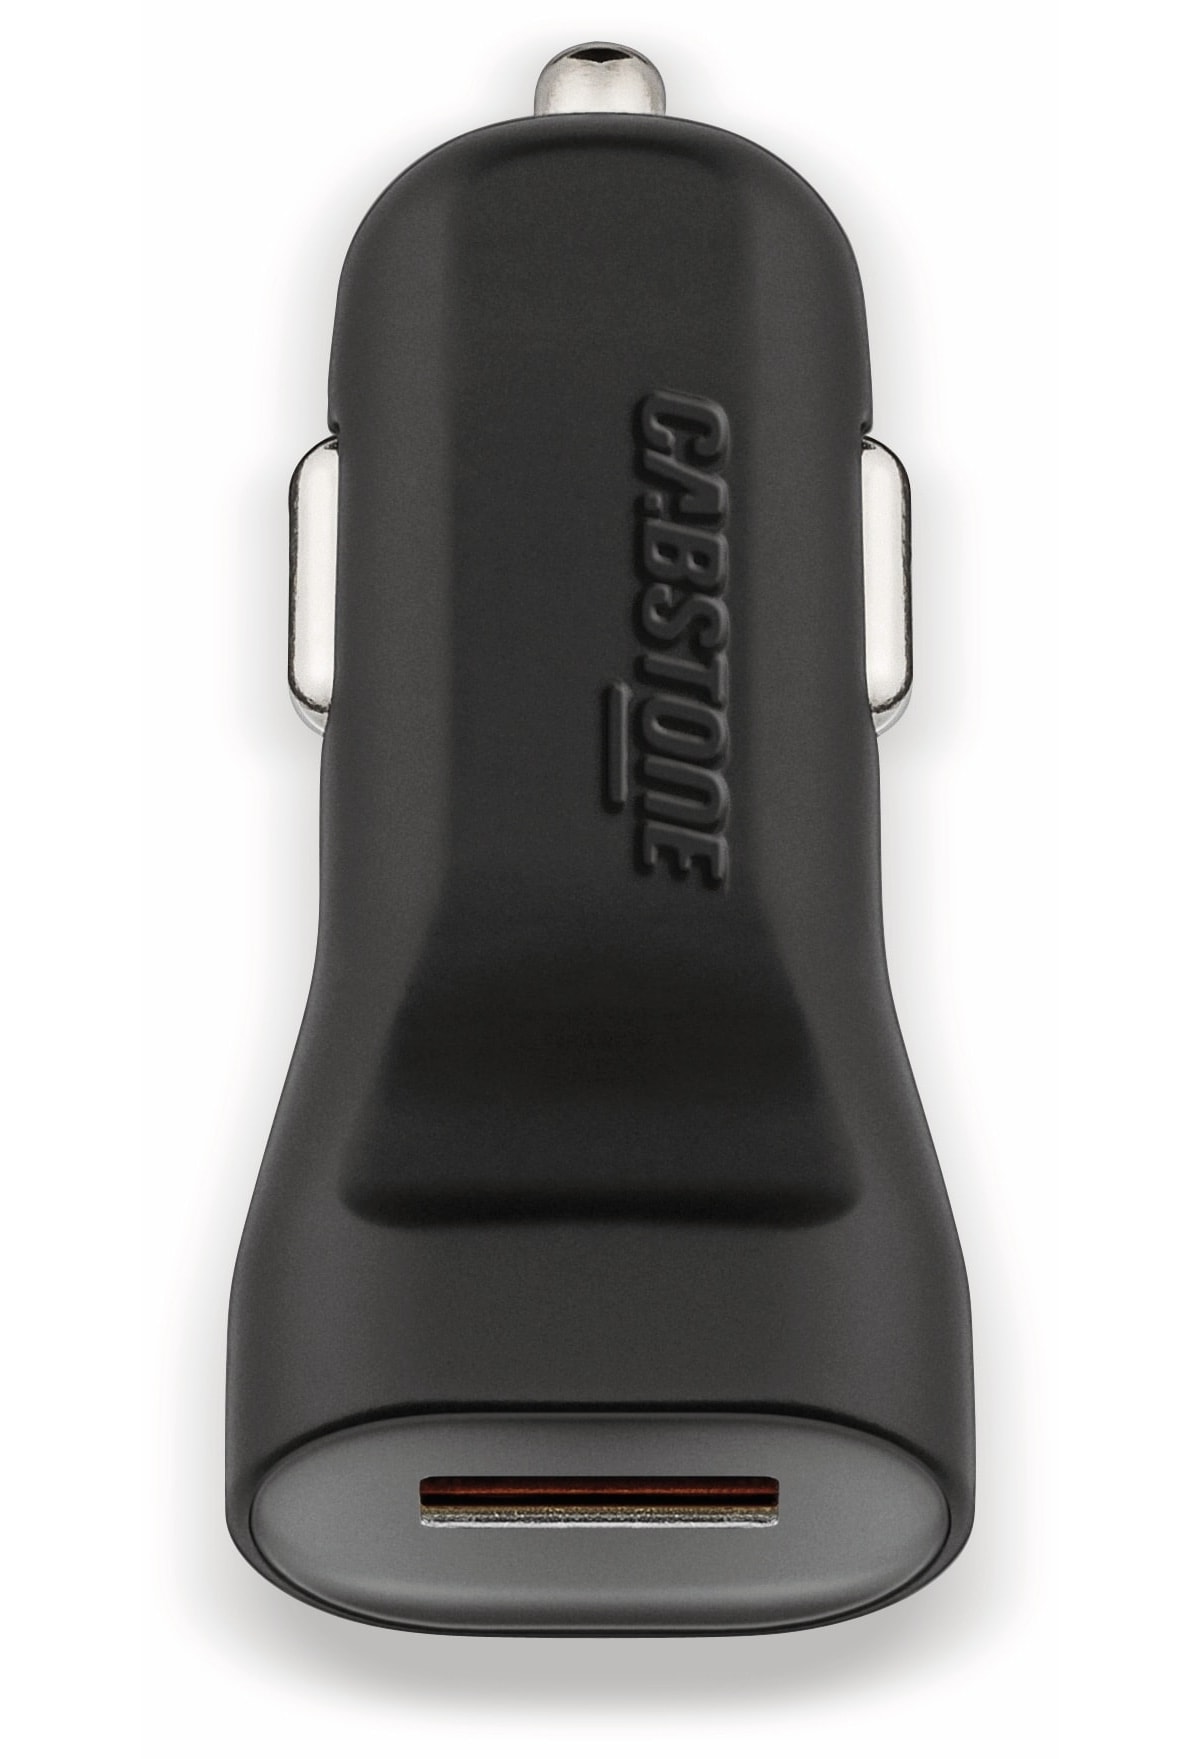 KFZ USB-Lader 1-Port, 5 V-/ 3 A, QC 3.0 Standard 